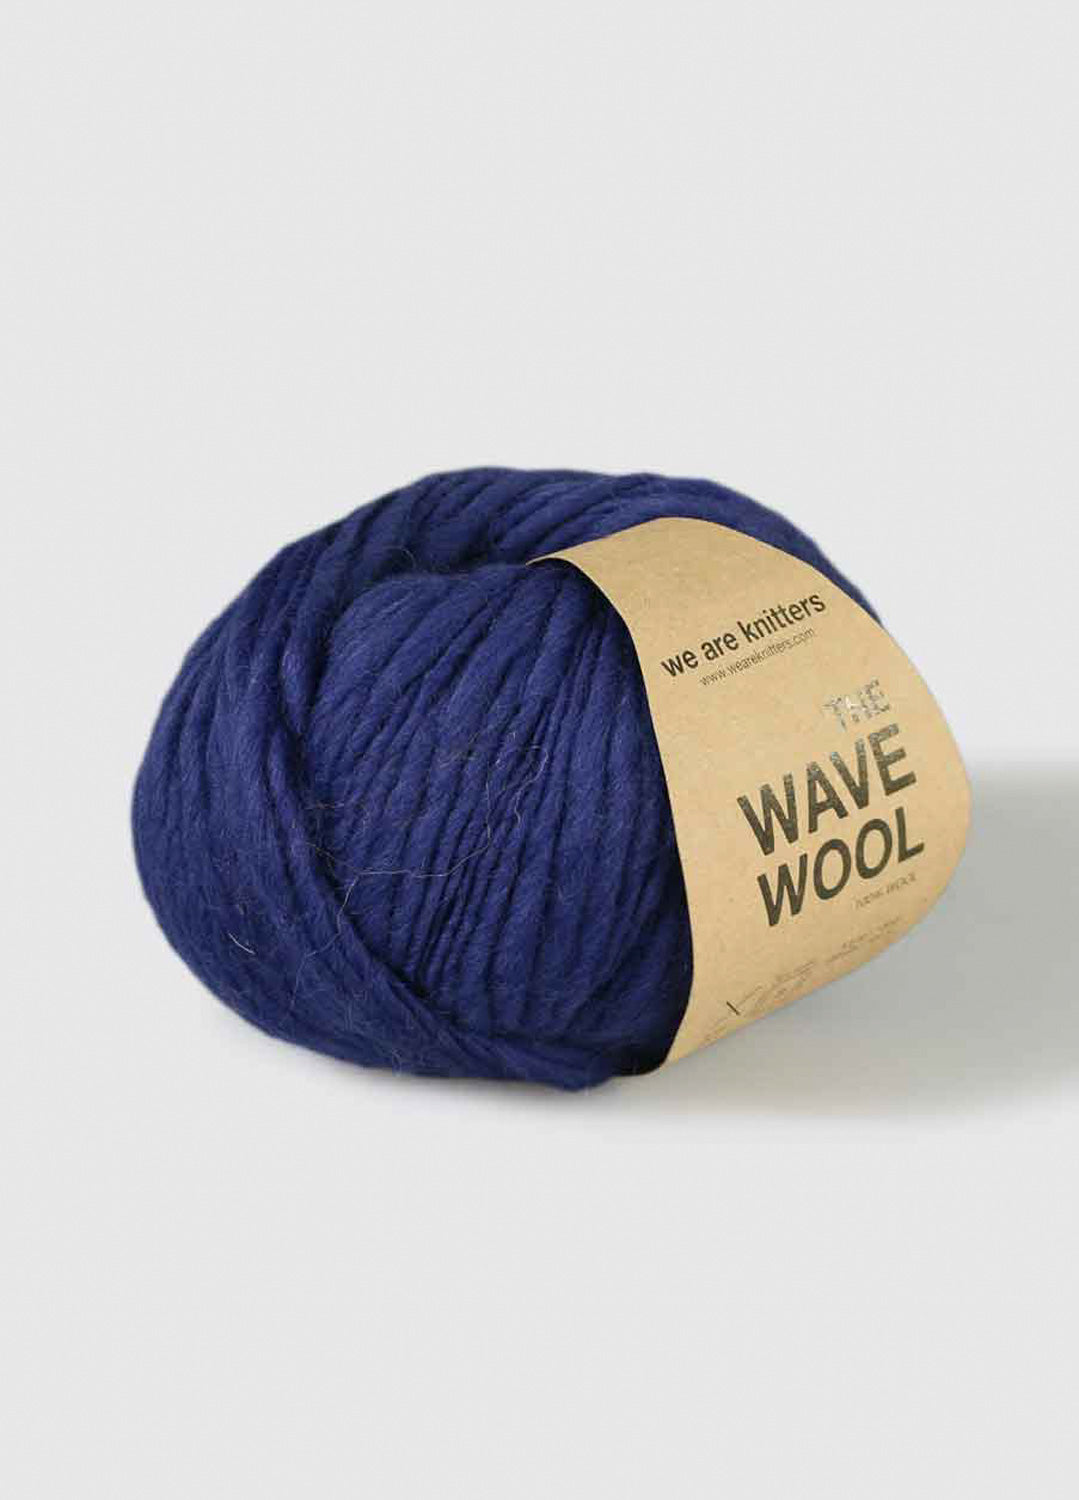 15 Pack of Bamboo Yarn Balls – weareknitters